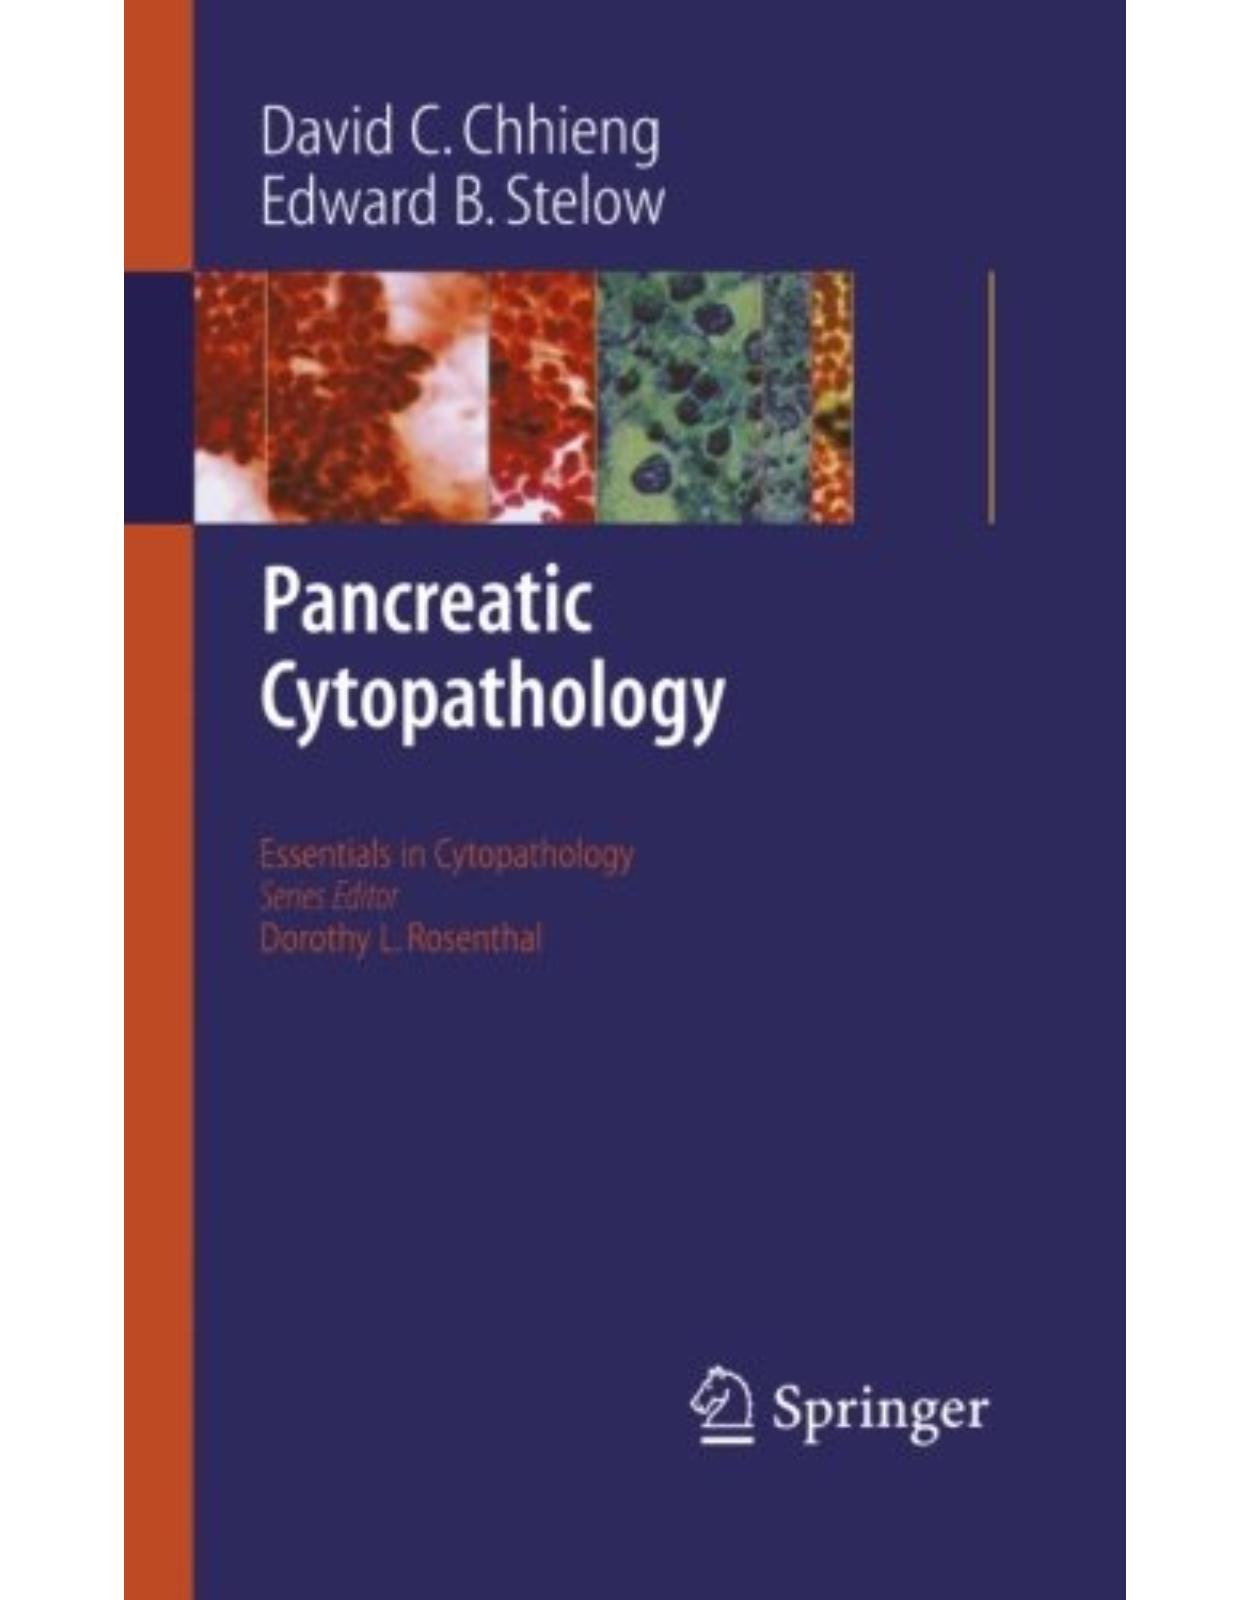 Pancreatic Cytopathology (Essentials in Cytopathology)